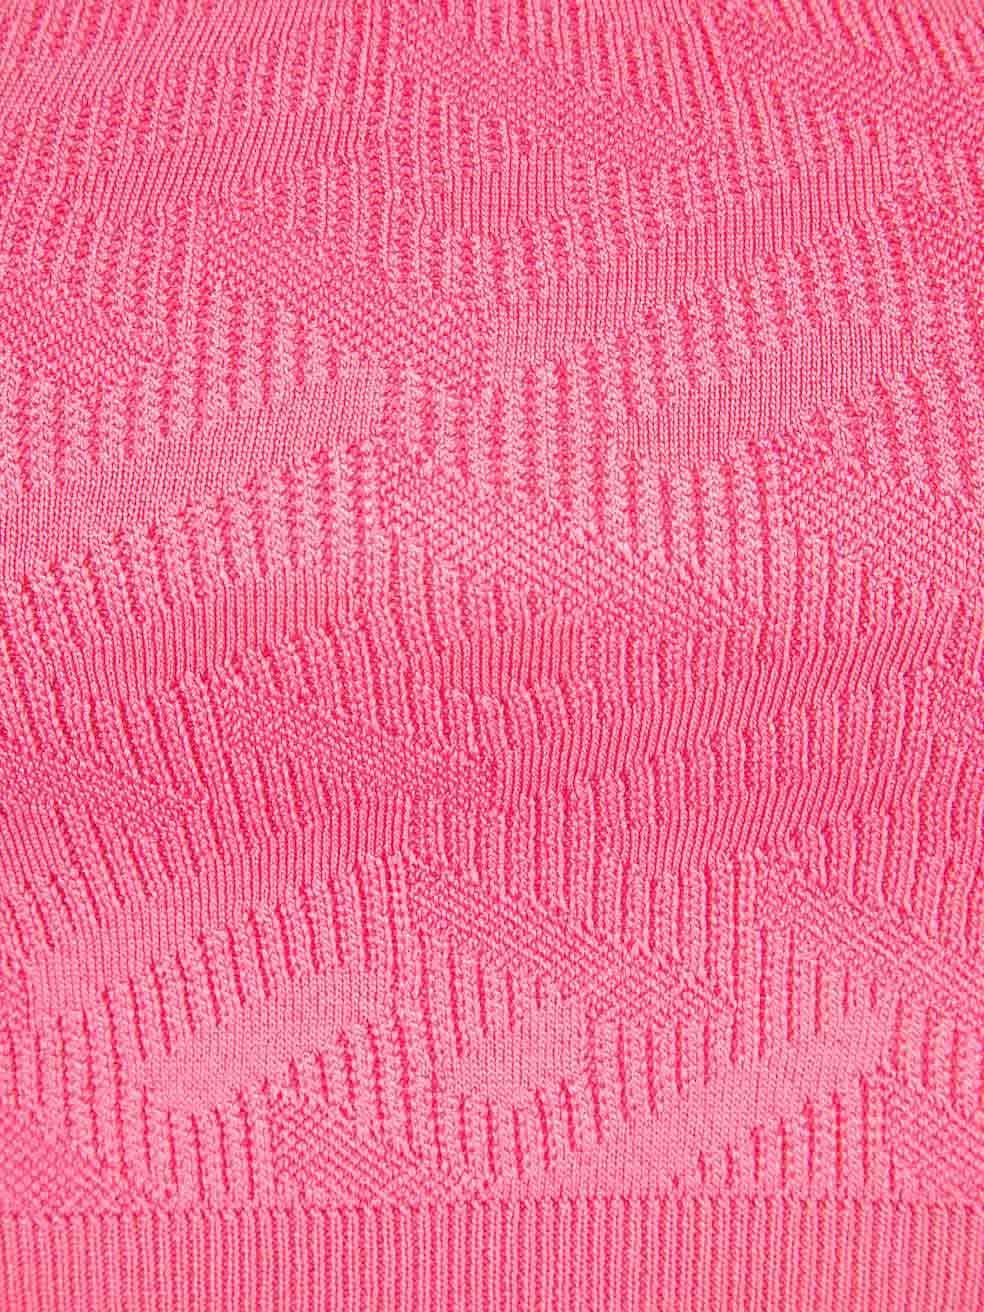 Versace Pink Paradise Medusa 95' Knit Crop Top Size XS For Sale 1